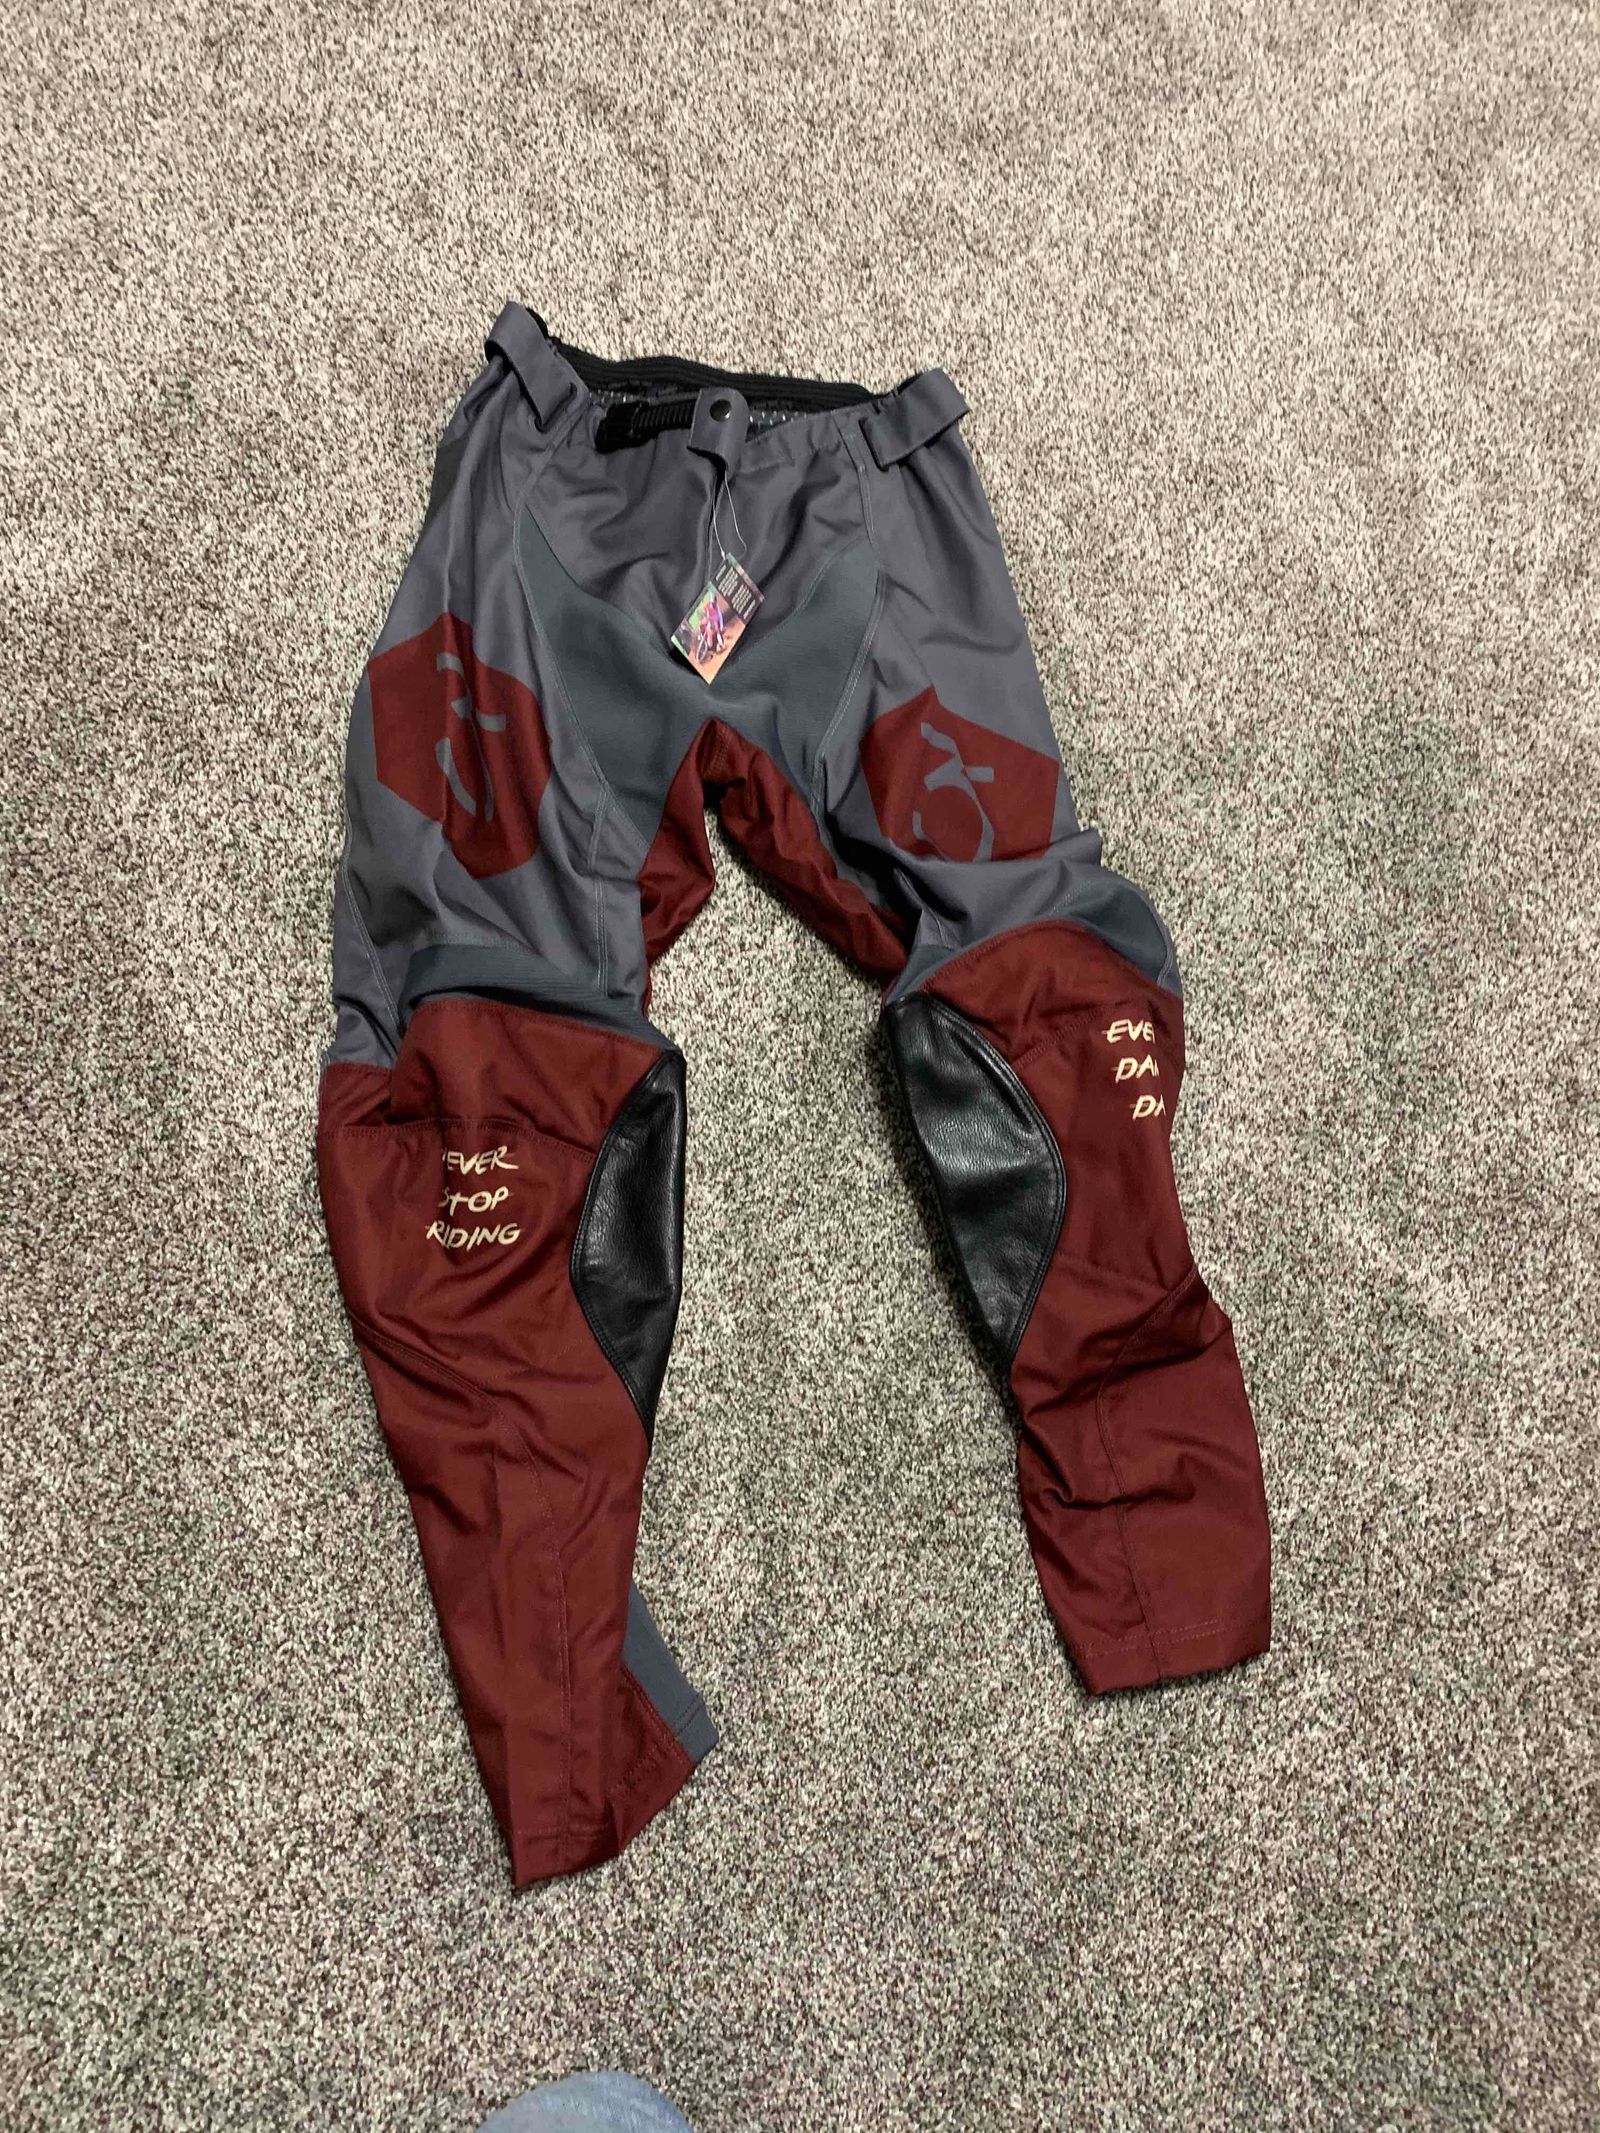 Men's 365MX Pants Only - Size 30